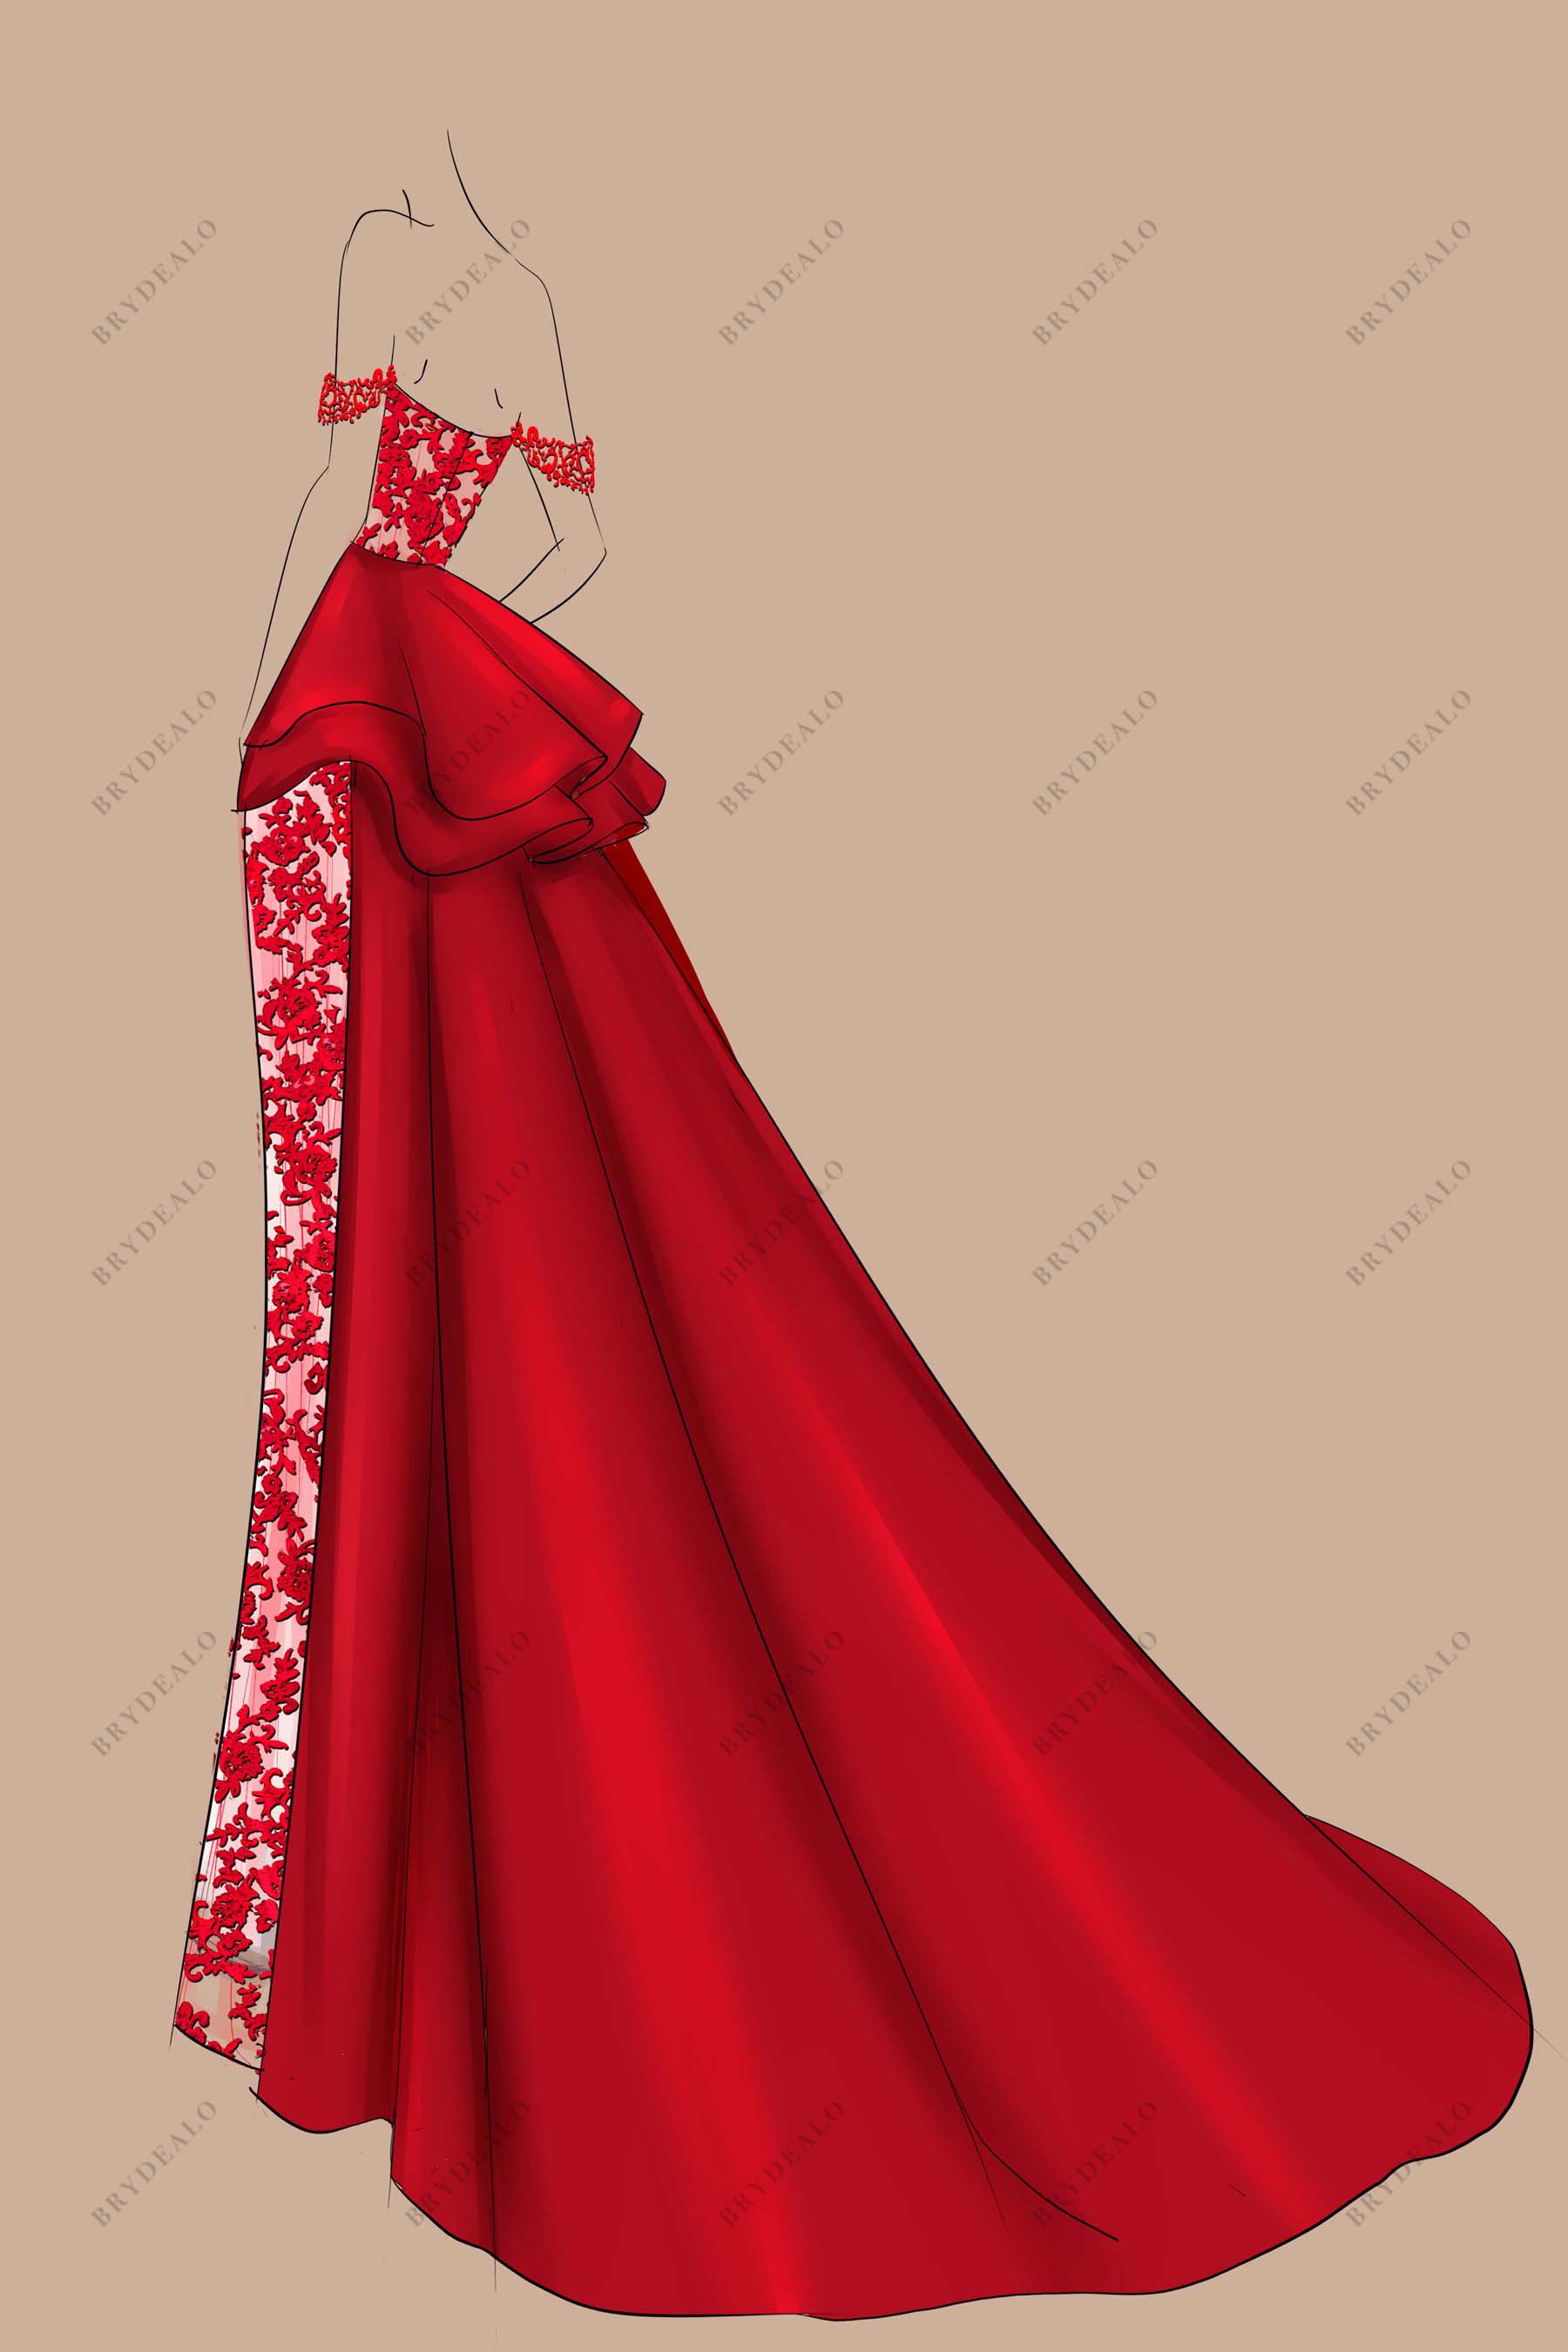 897 Prom Dress Sketch Images, Stock Photos & Vectors | Shutterstock